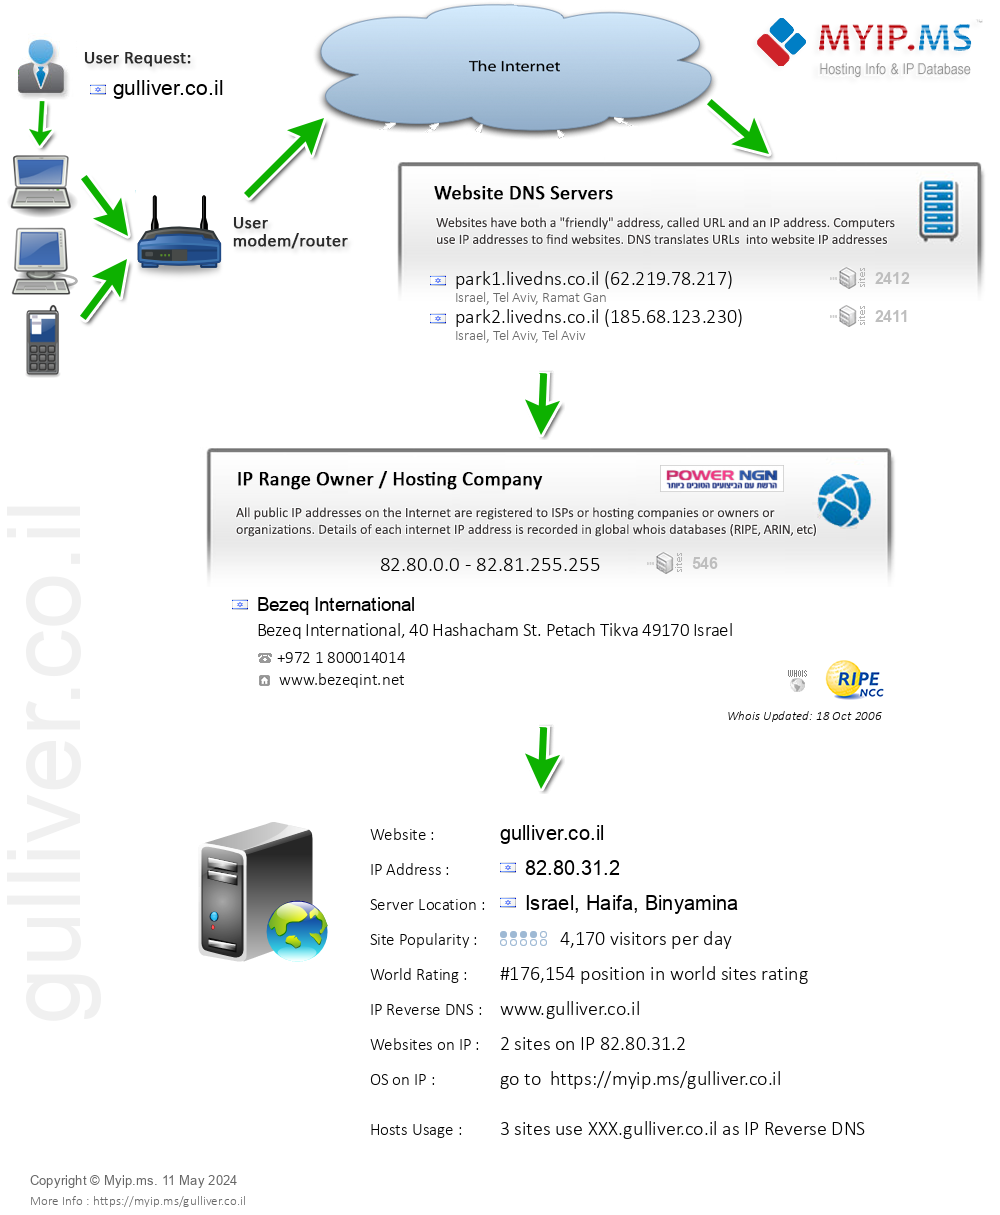 Gulliver.co.il - Website Hosting Visual IP Diagram